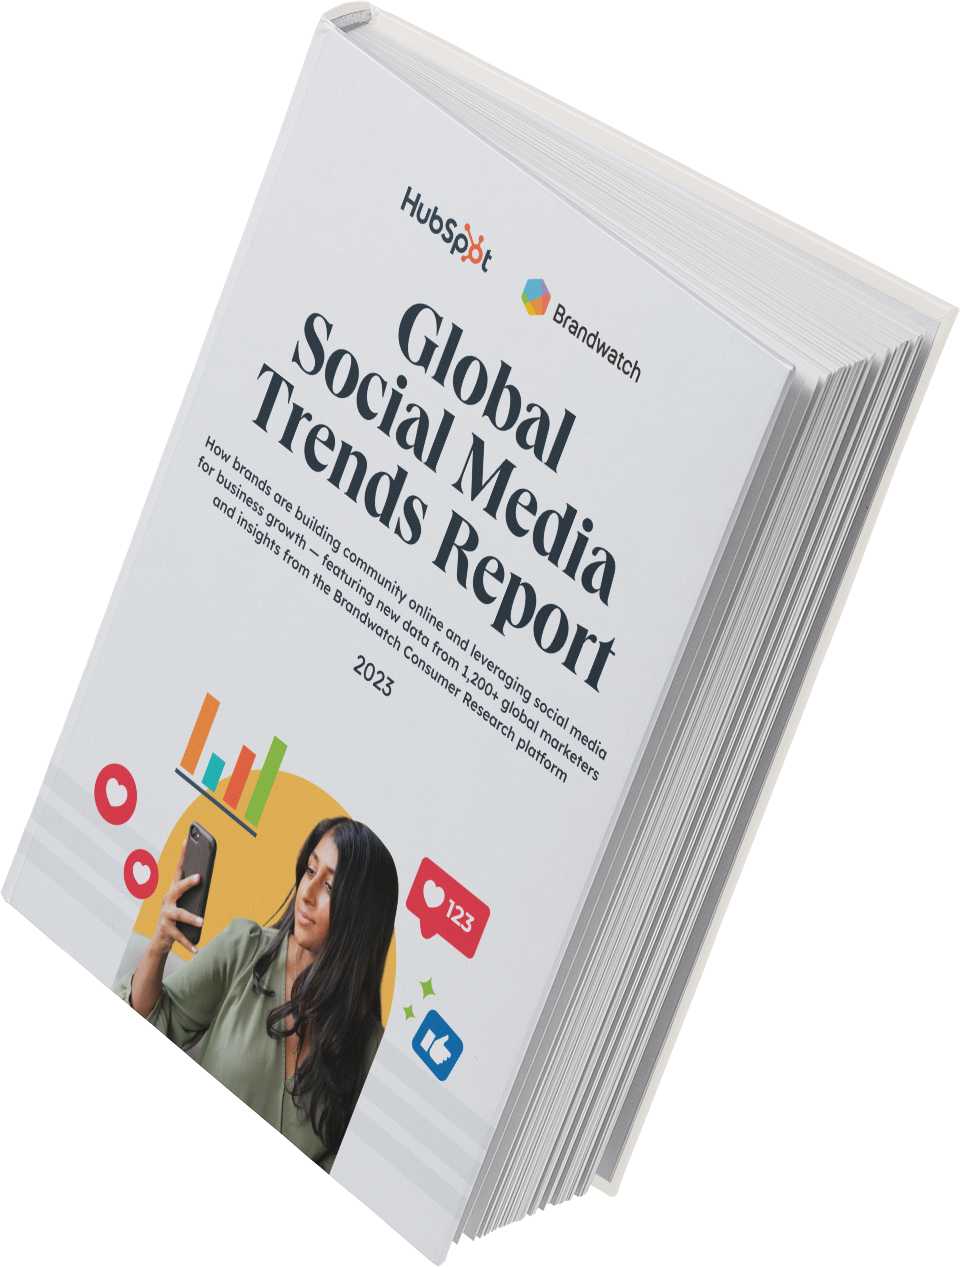 The 2023 Social Media Trends Report